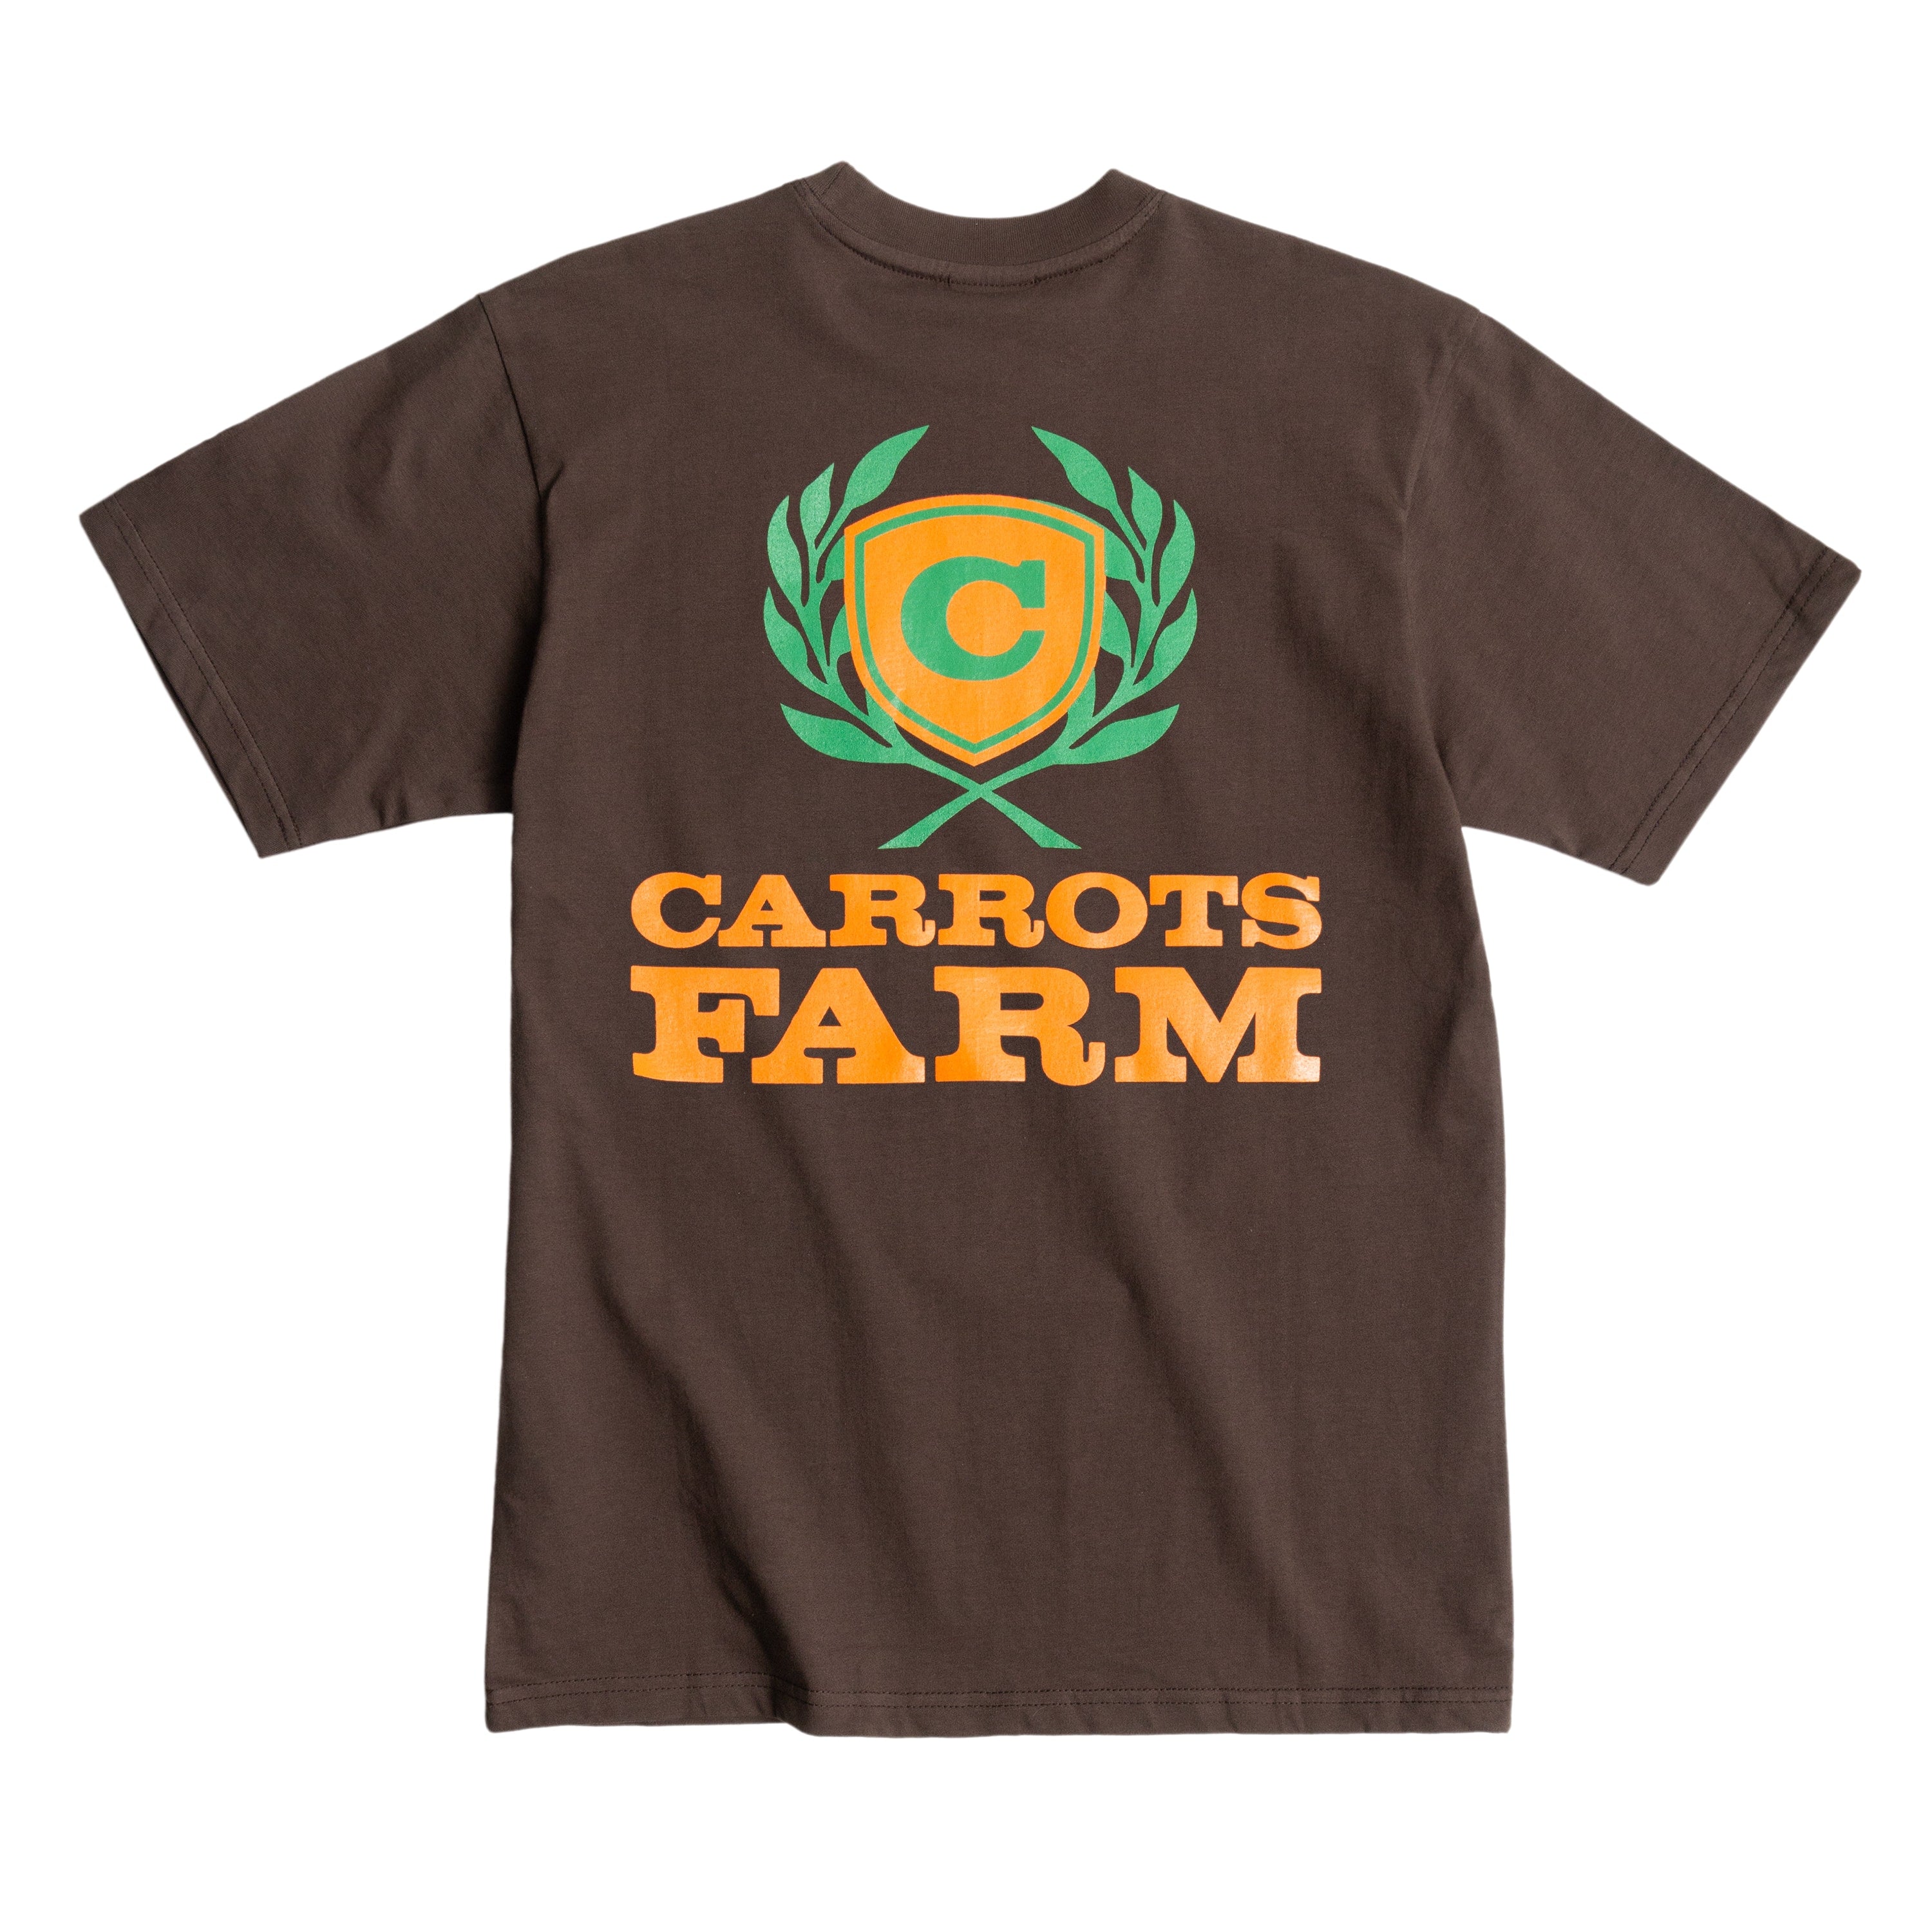 CARROTS FARM TEE - BROWN